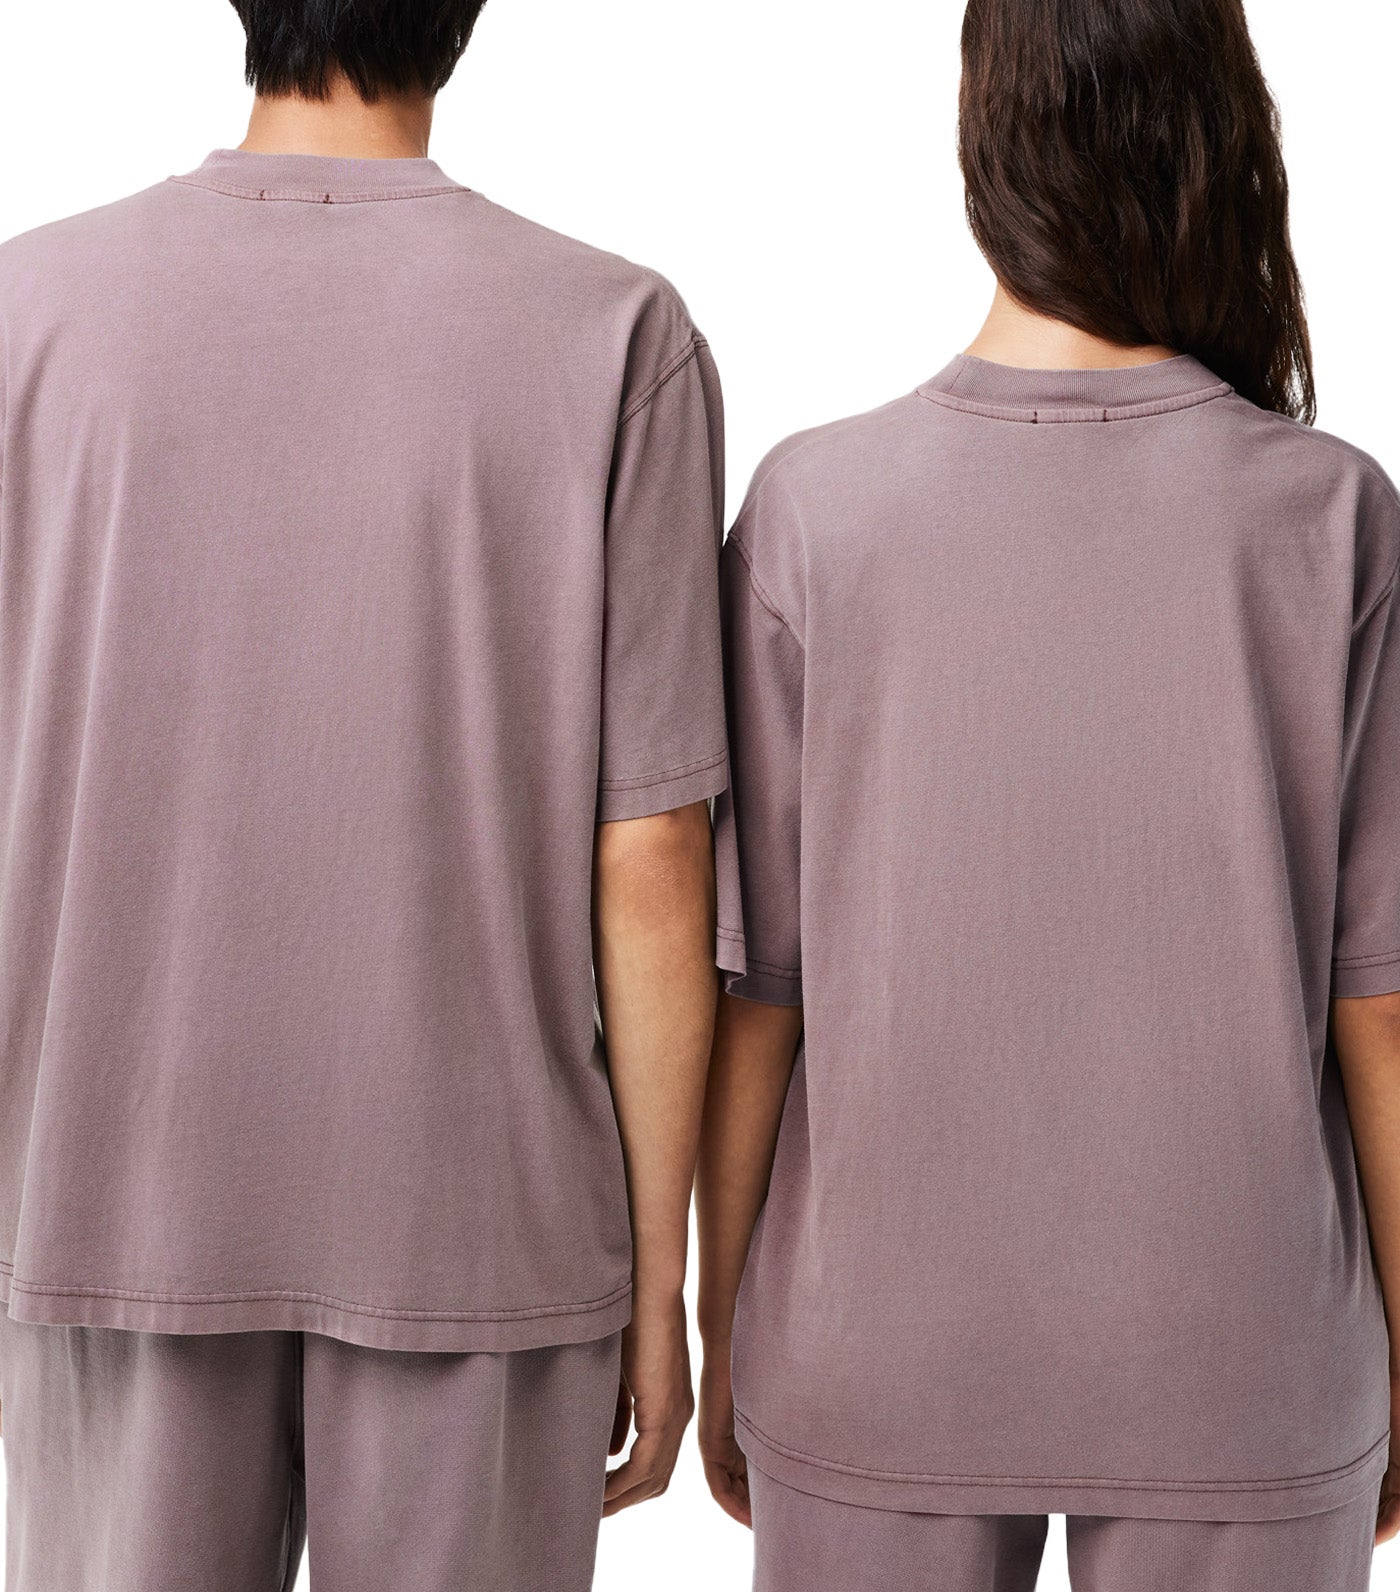 Loose Fit Cotton Jersey T-Shirt  Eco Purple Dove